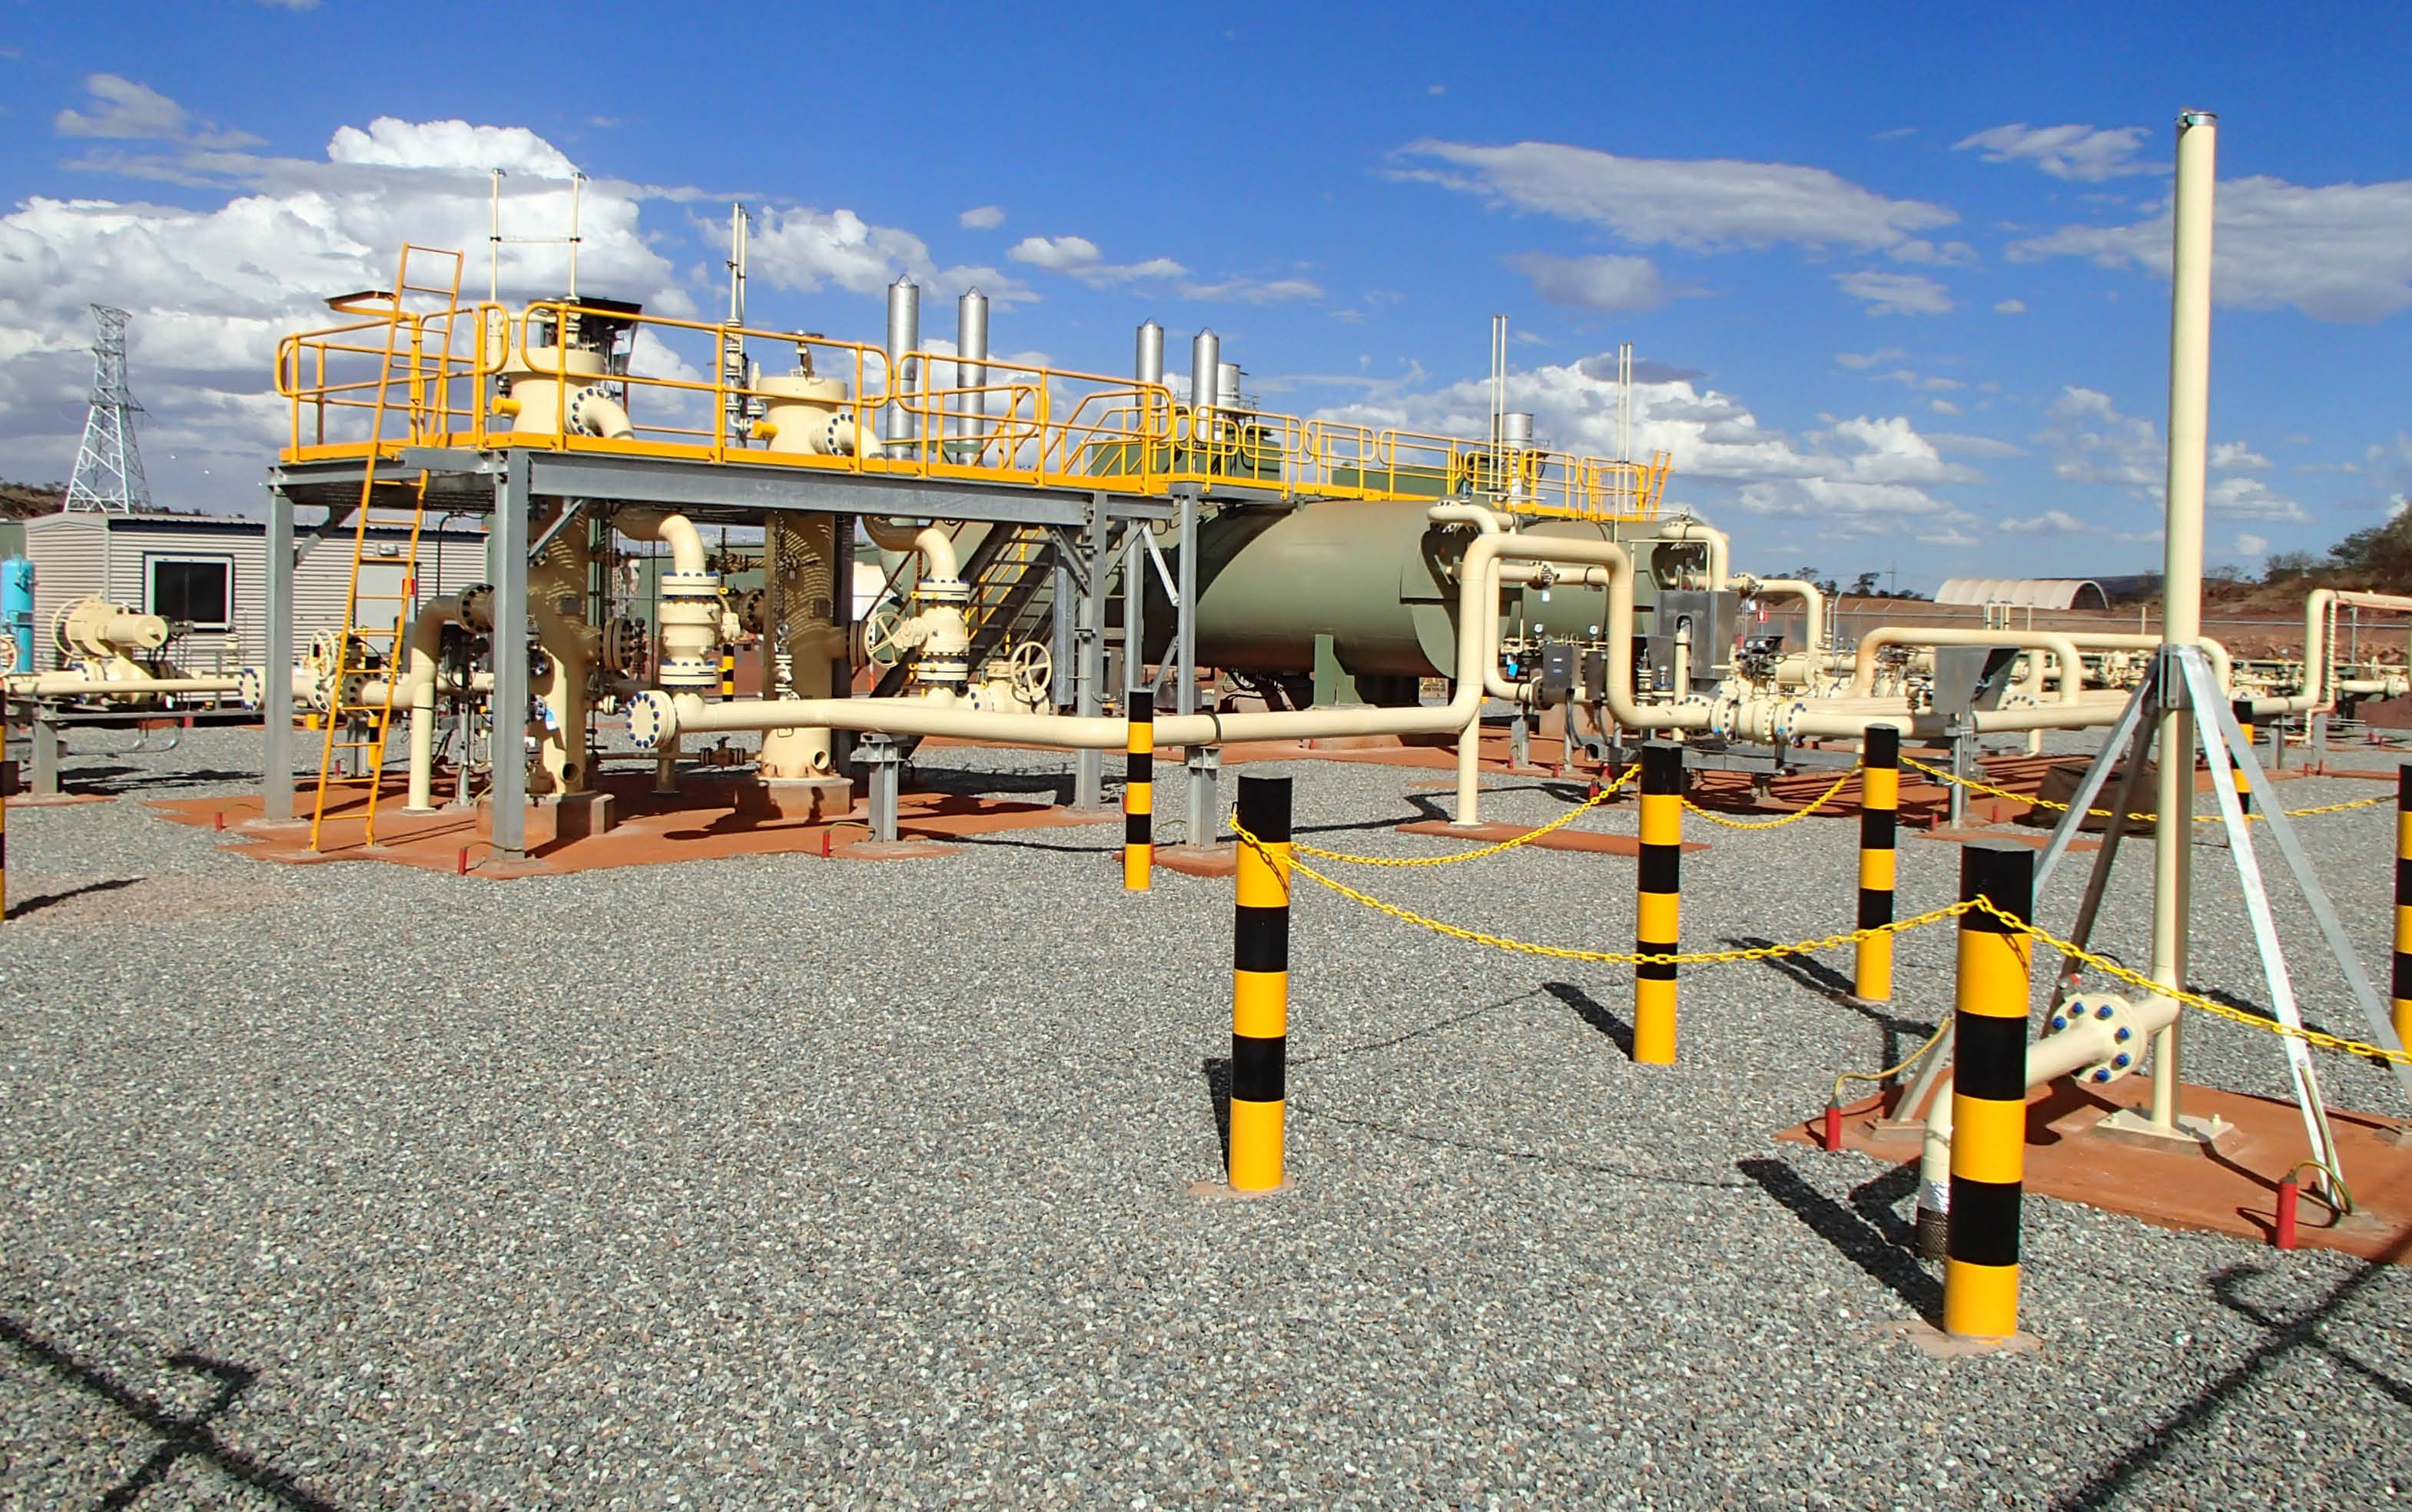 SCADA engineering allows 'remote control' of Pilbara gas assets